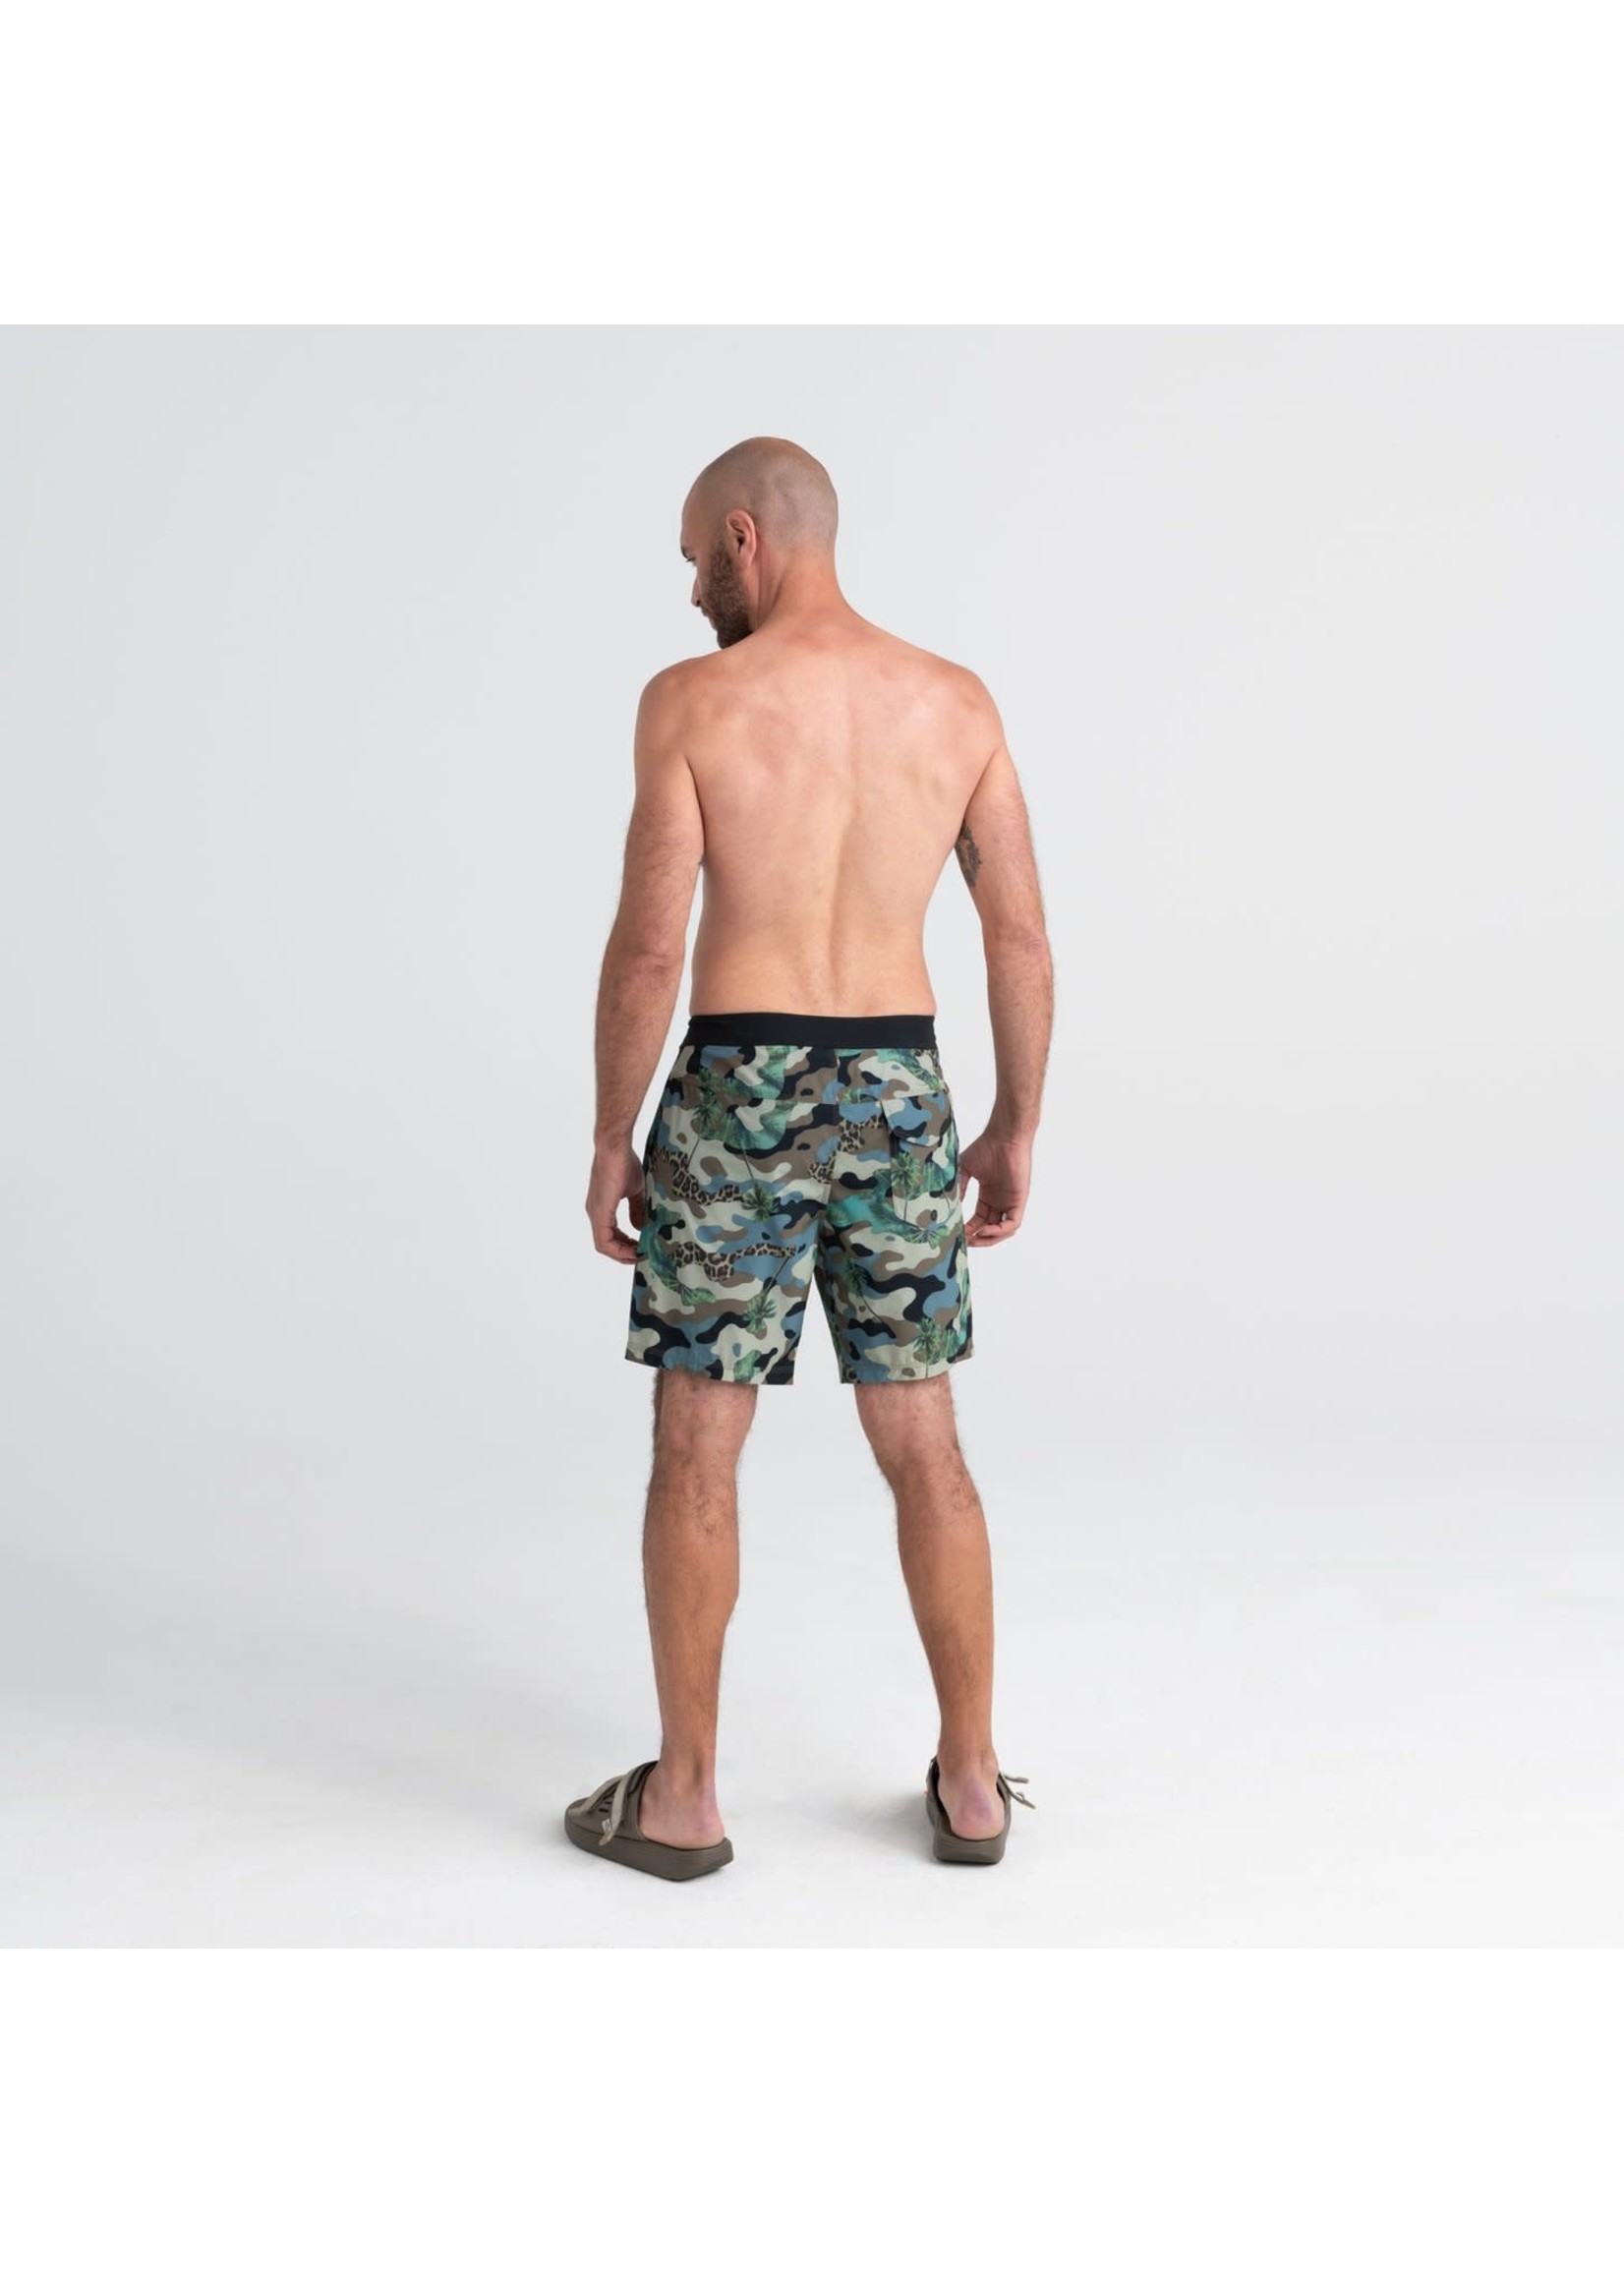 SAXX BETAWAVE Swim Shorts 17" / Green Jungle Camo